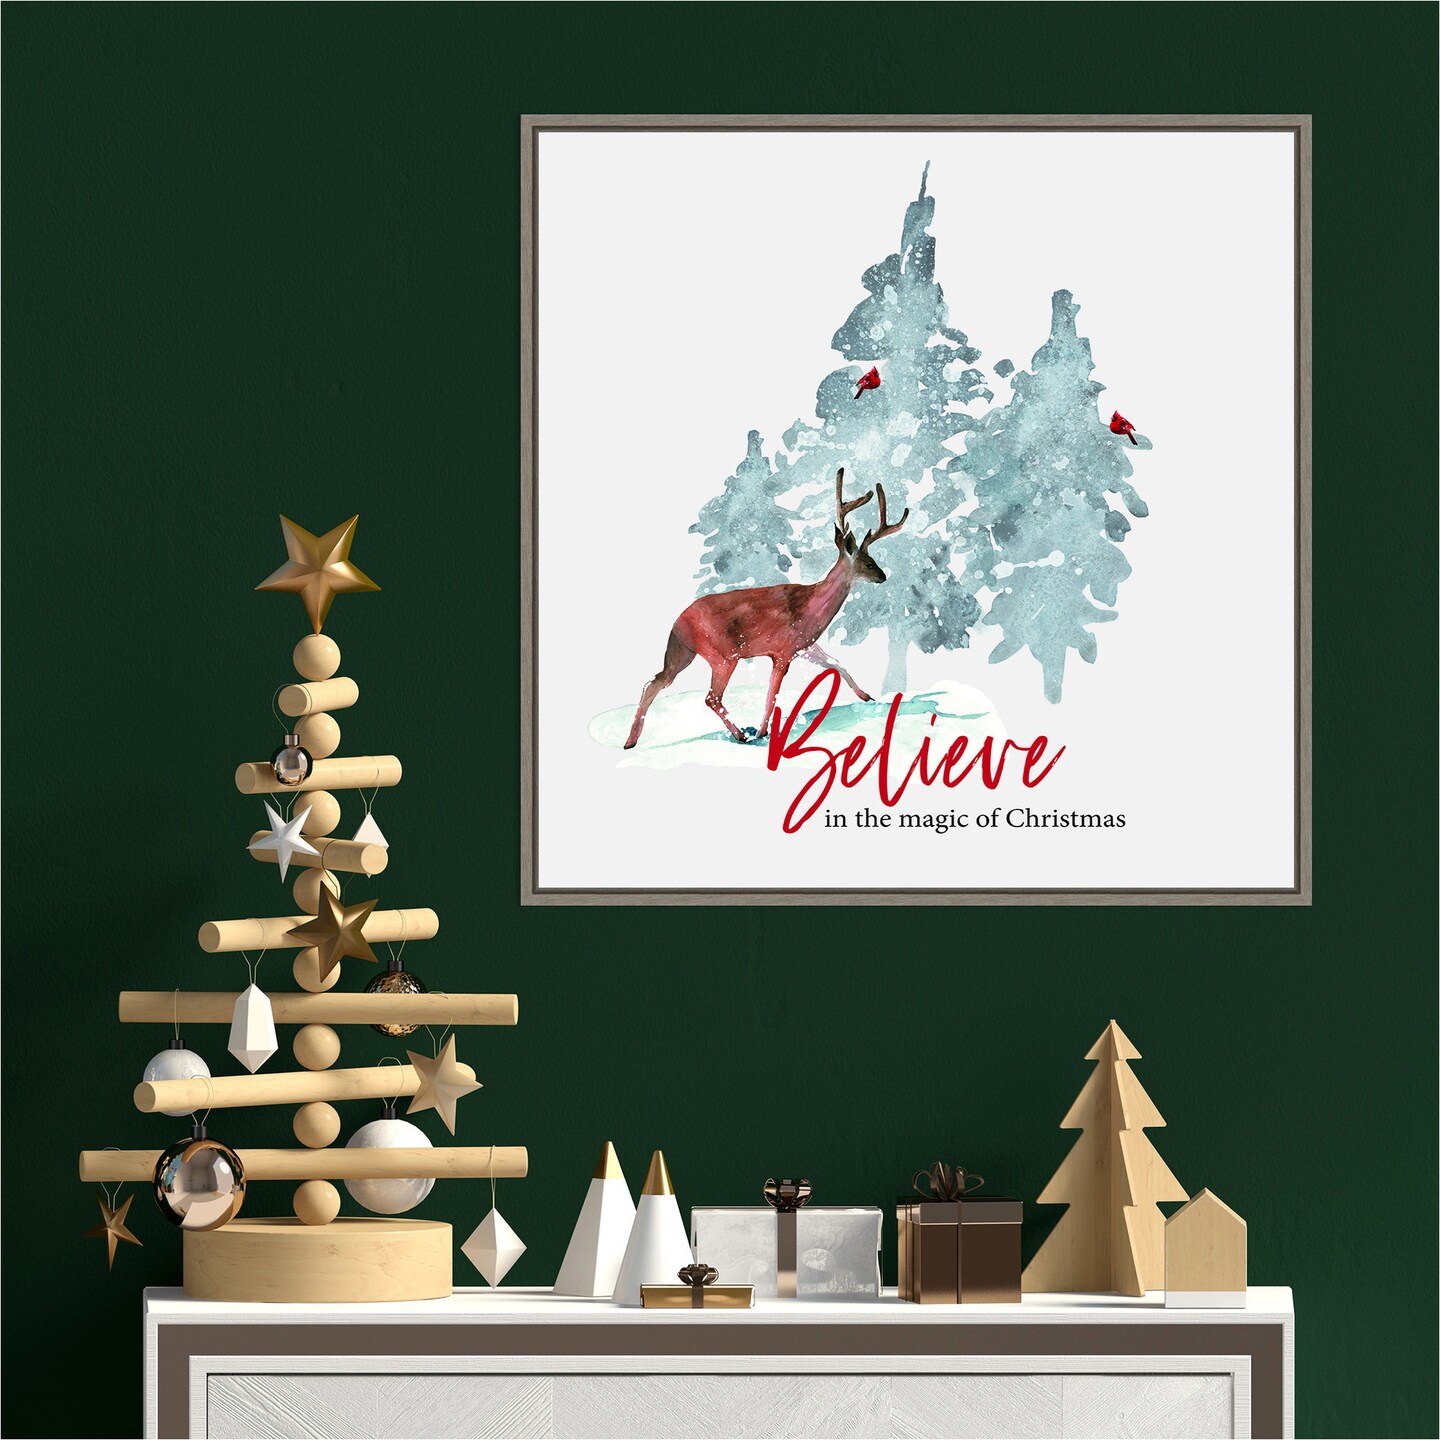 Believe in Christmas by Amanti Art Portfolio 22-in. W x 22-in. H. Canvas Wall Art Print Framed in Grey